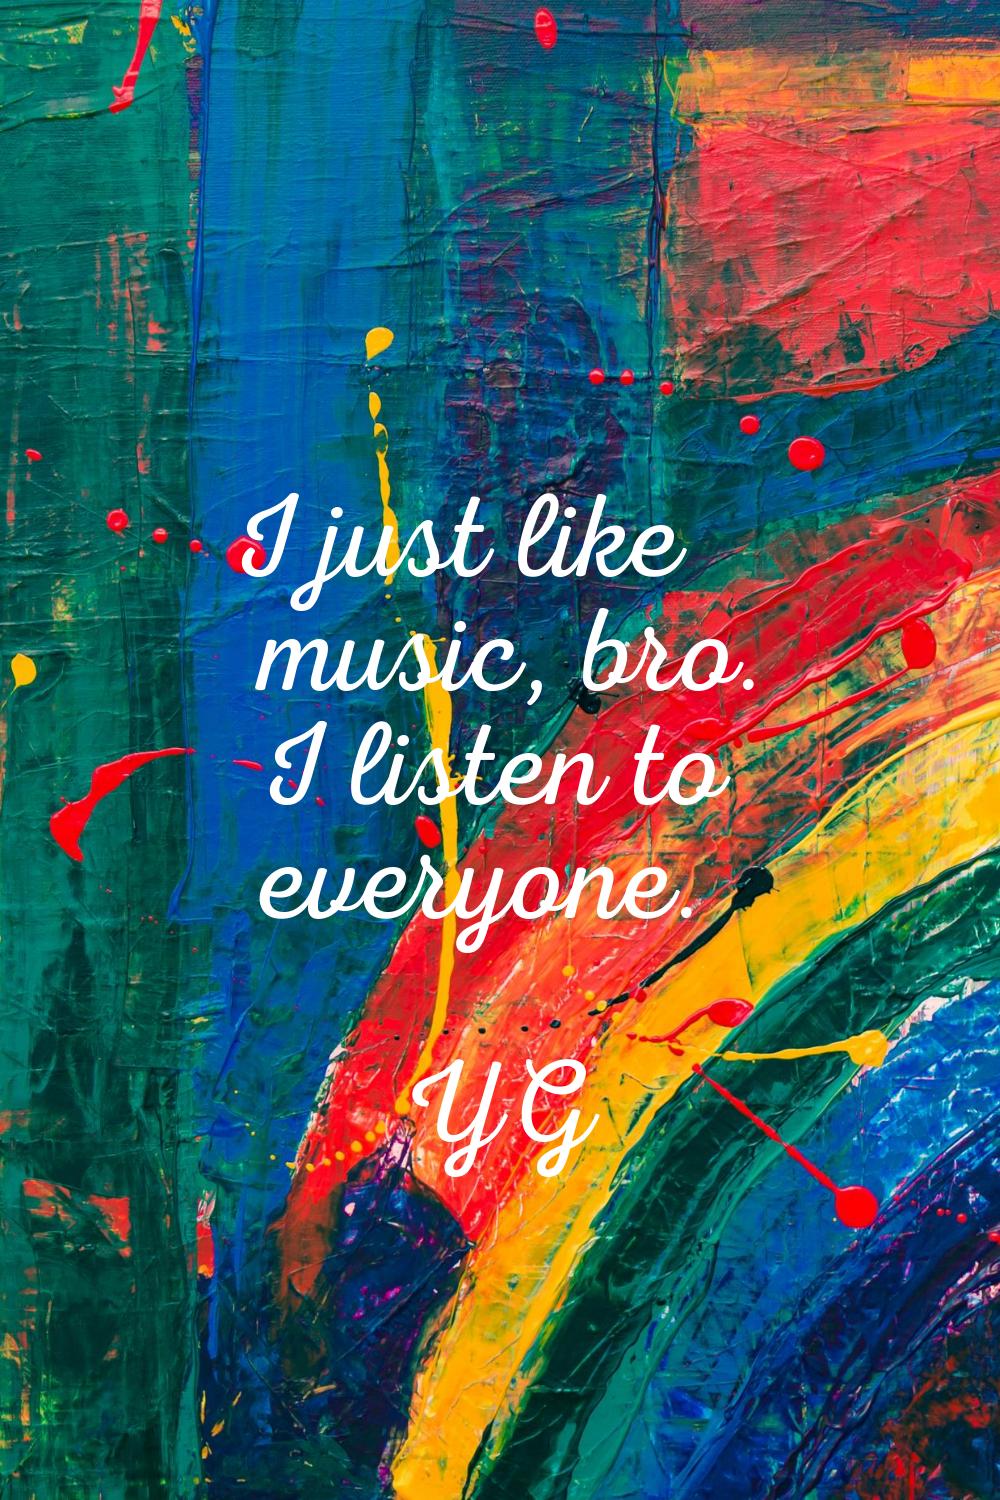 I just like music, bro. I listen to everyone.